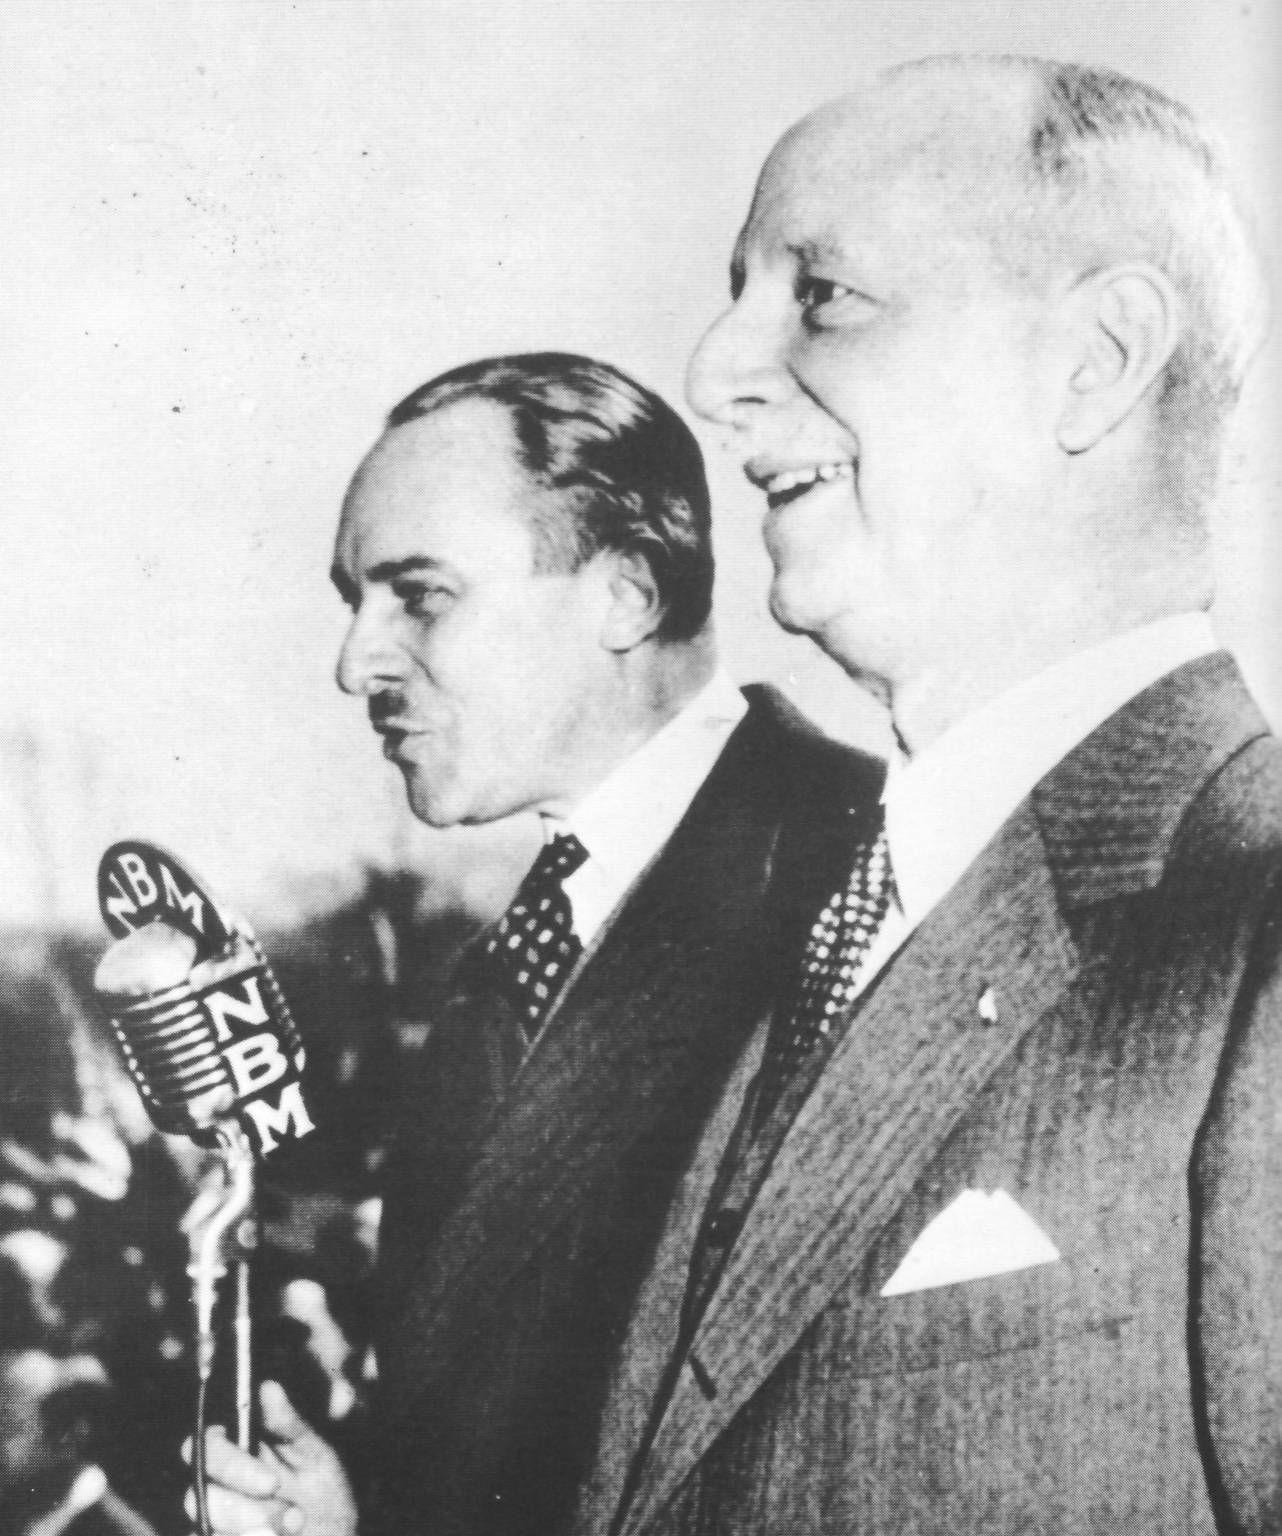 Sosthenes Behn et Maurice Deloraine en 1946